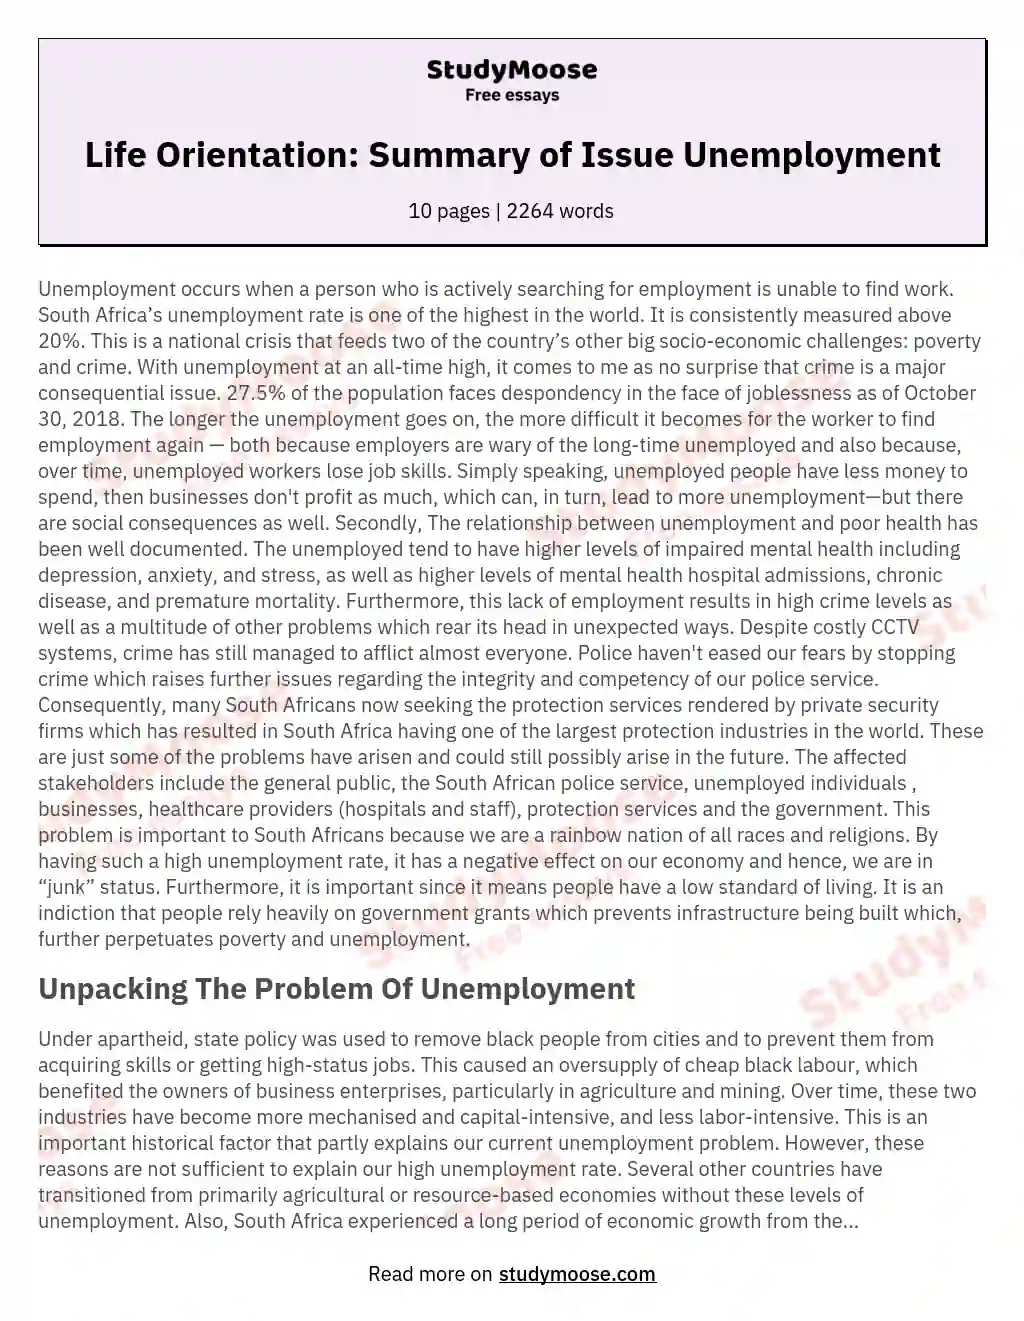 Life Orientation: Summary of Issue Unemployment